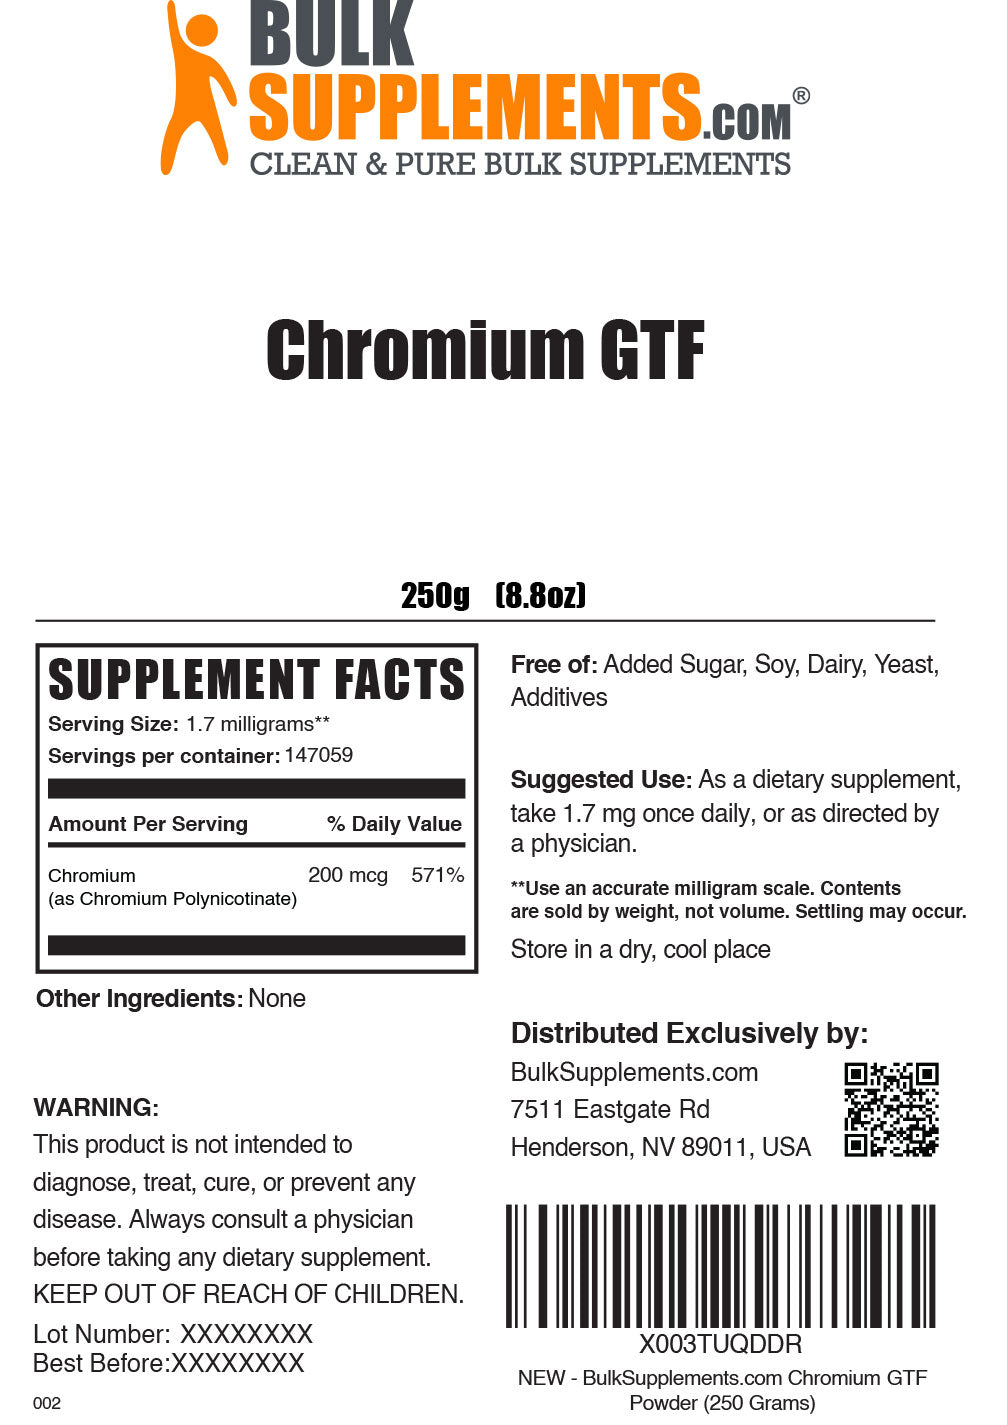 250g chromium GTF supplement facts label